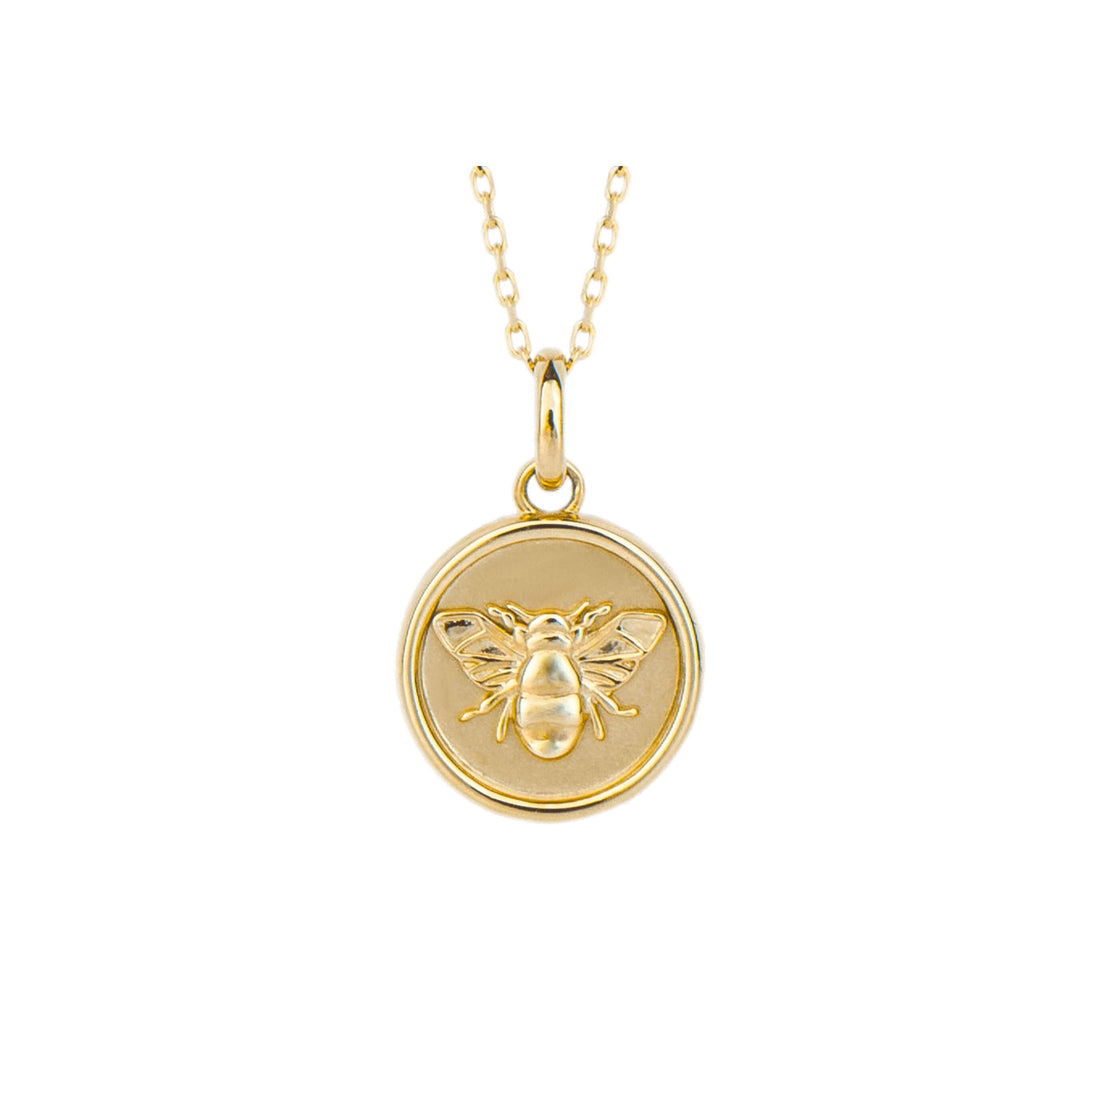 Bee Medallion Pendant in 9ct Yellow Gold - Robert Anthony Jewellers, Edinburgh